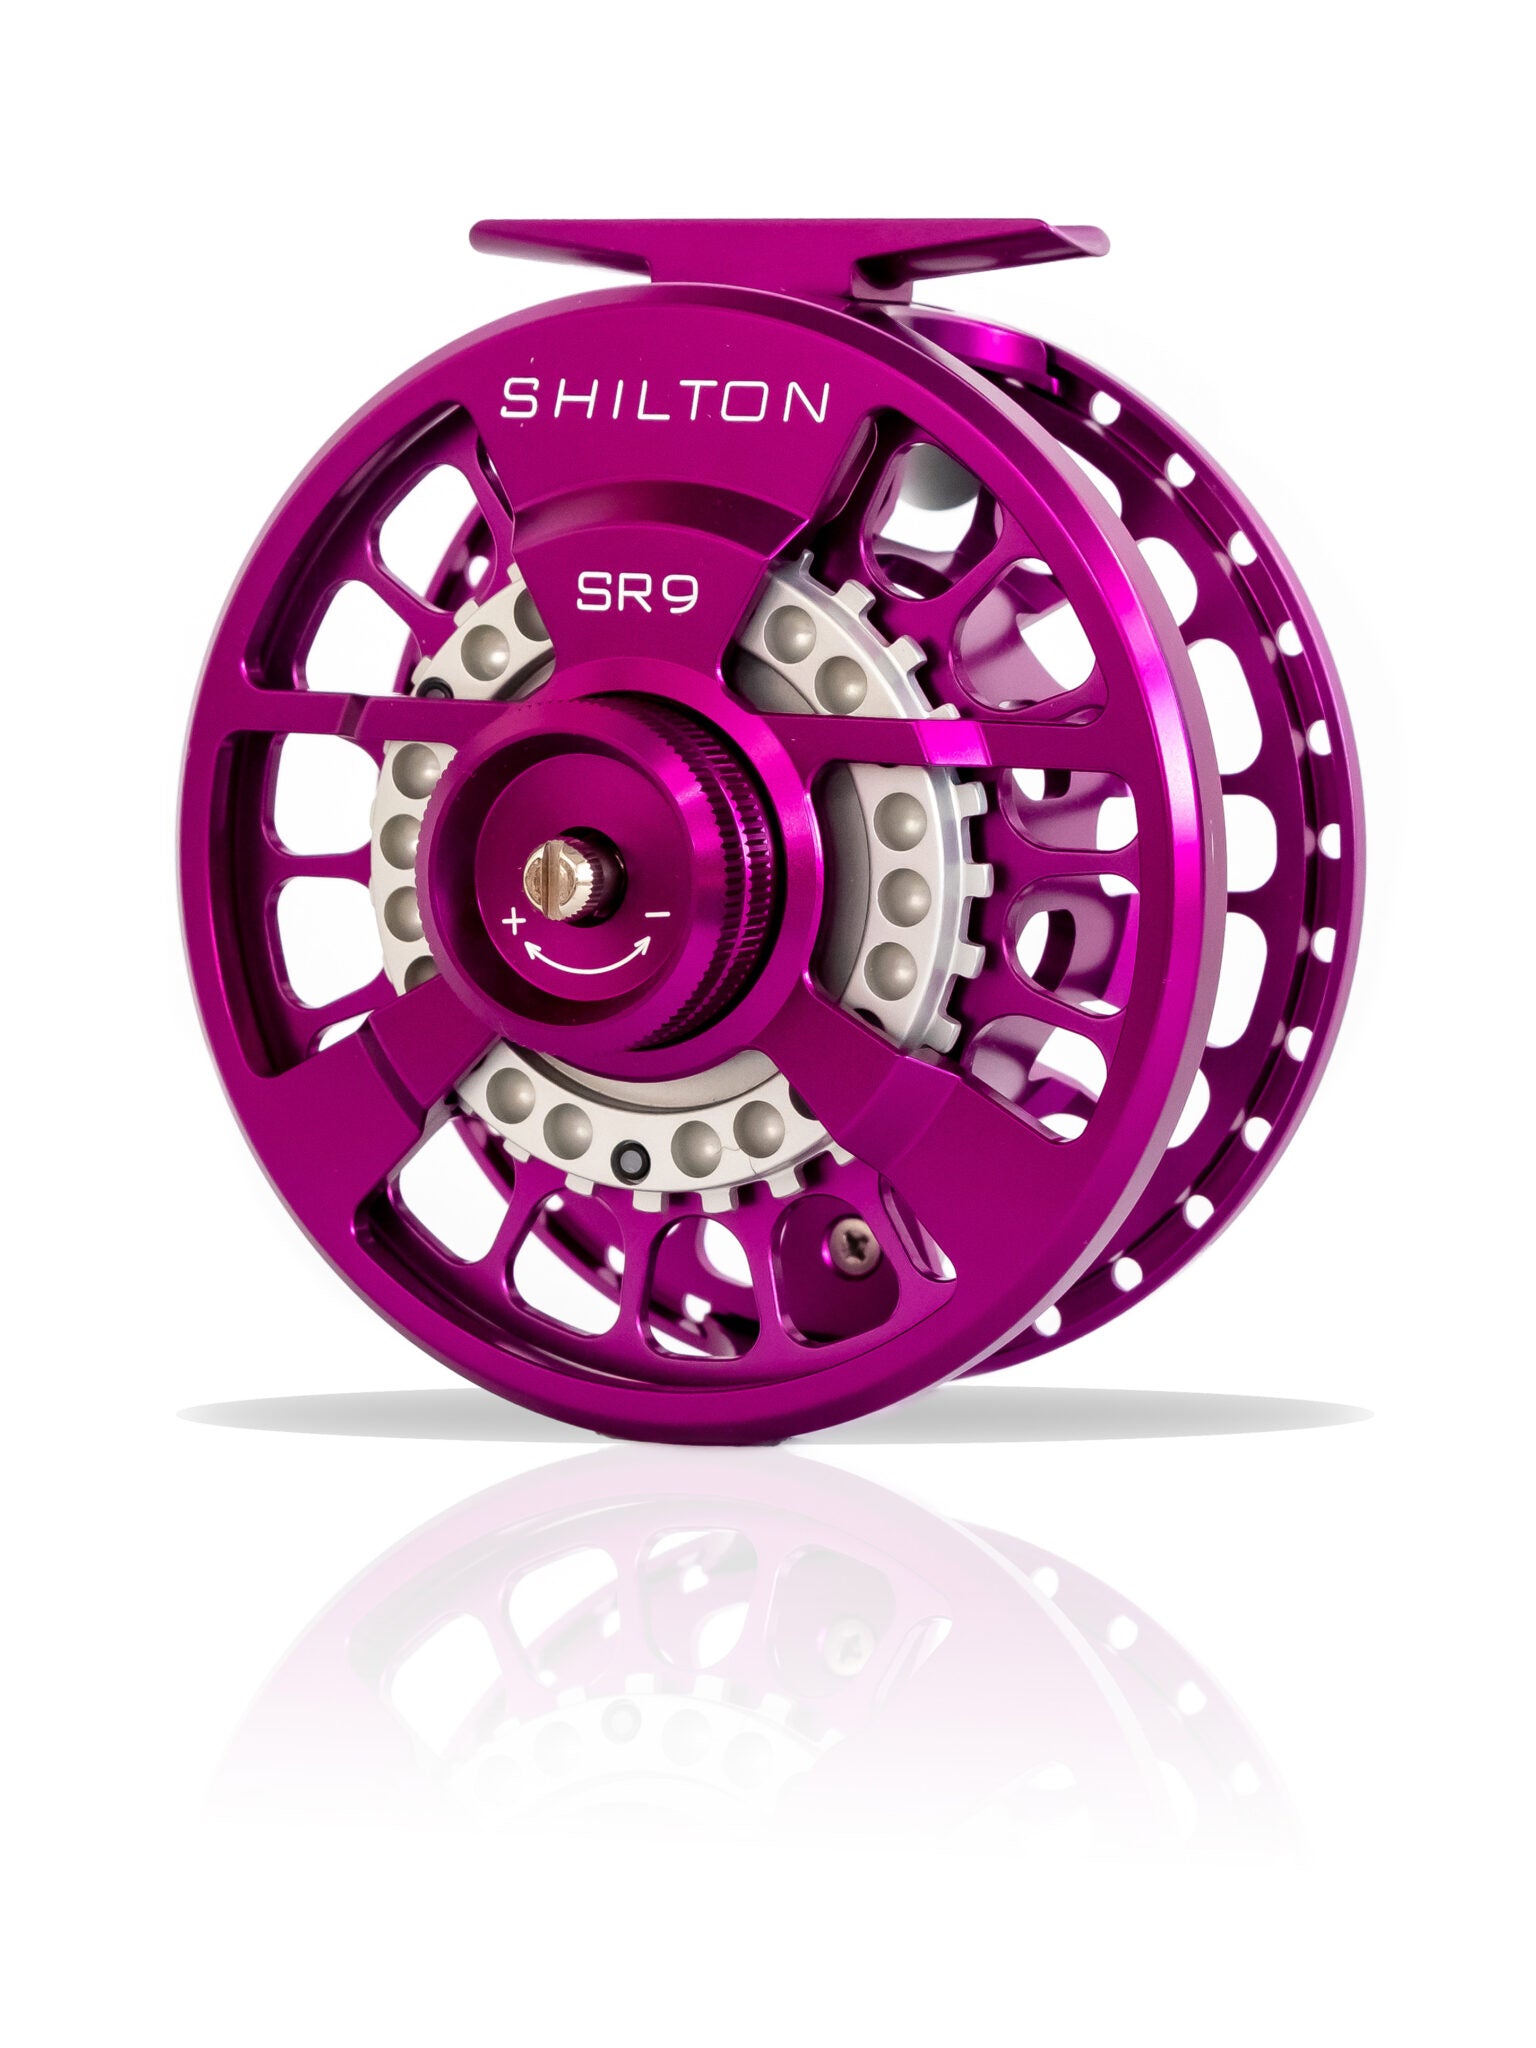 Shilton SR9 Purple Reels (8-9wt) - NEW!